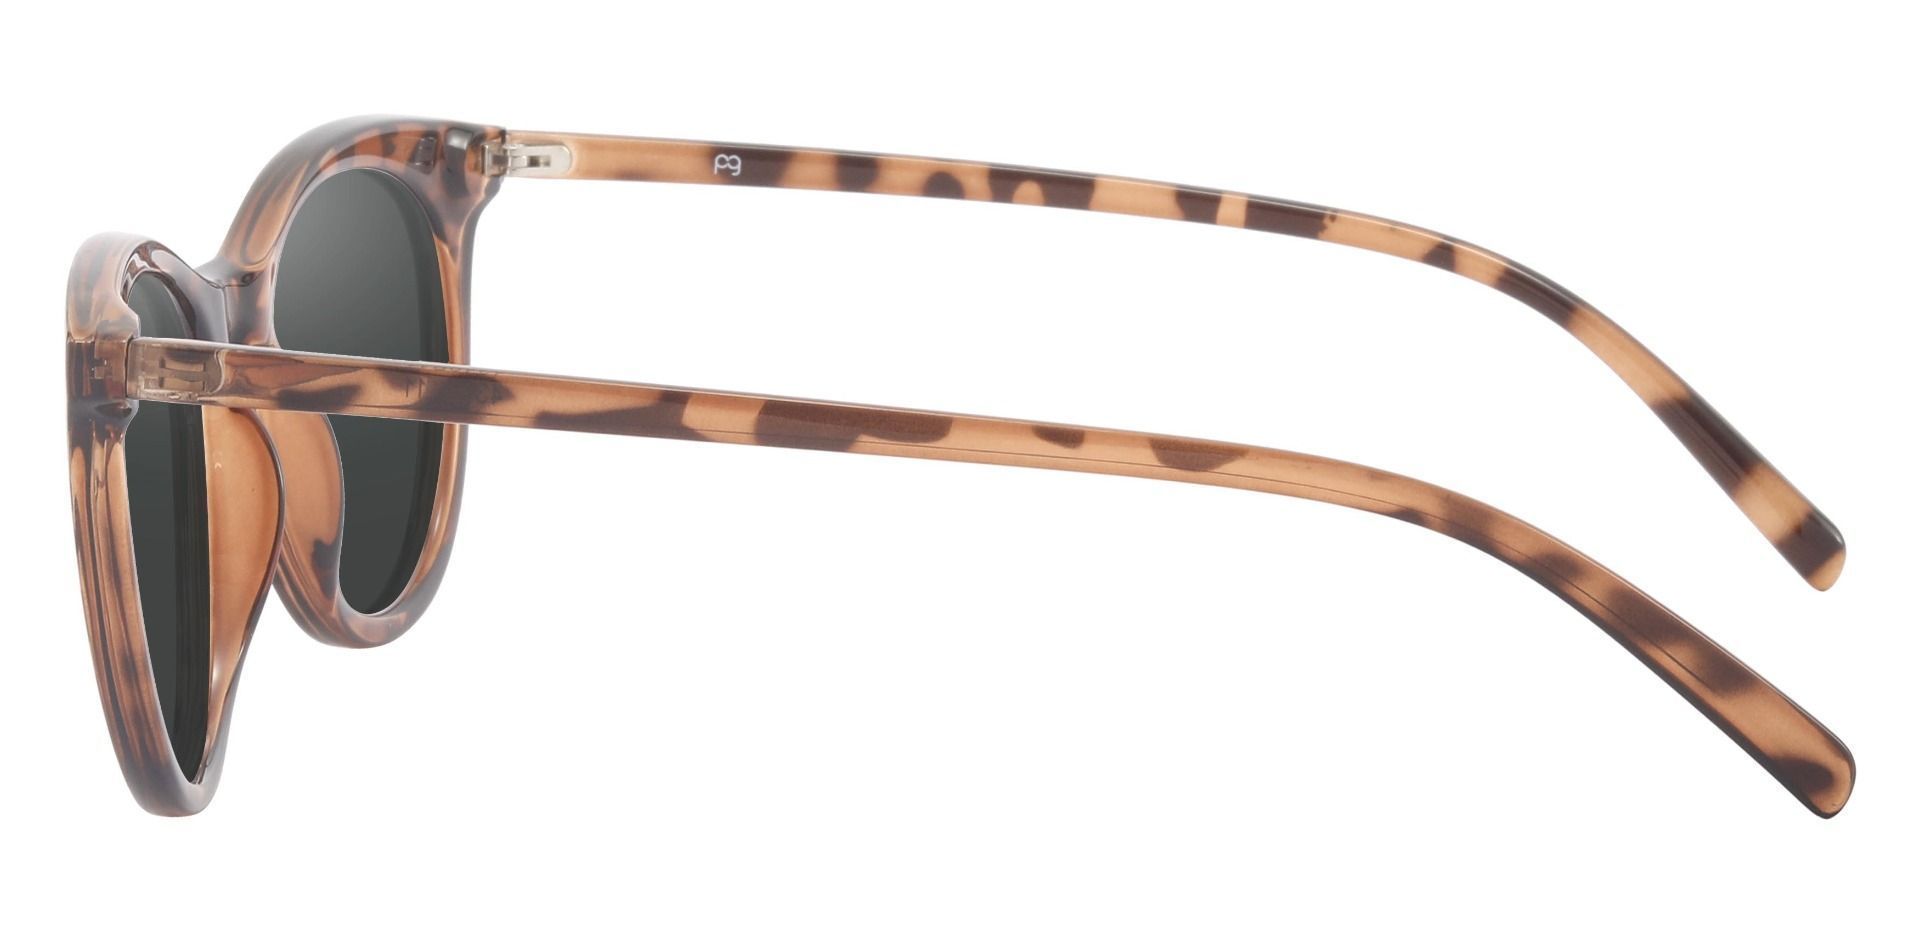 Valencia Cat Eye Prescription Sunglasses - Brown Frame With Gray Lenses